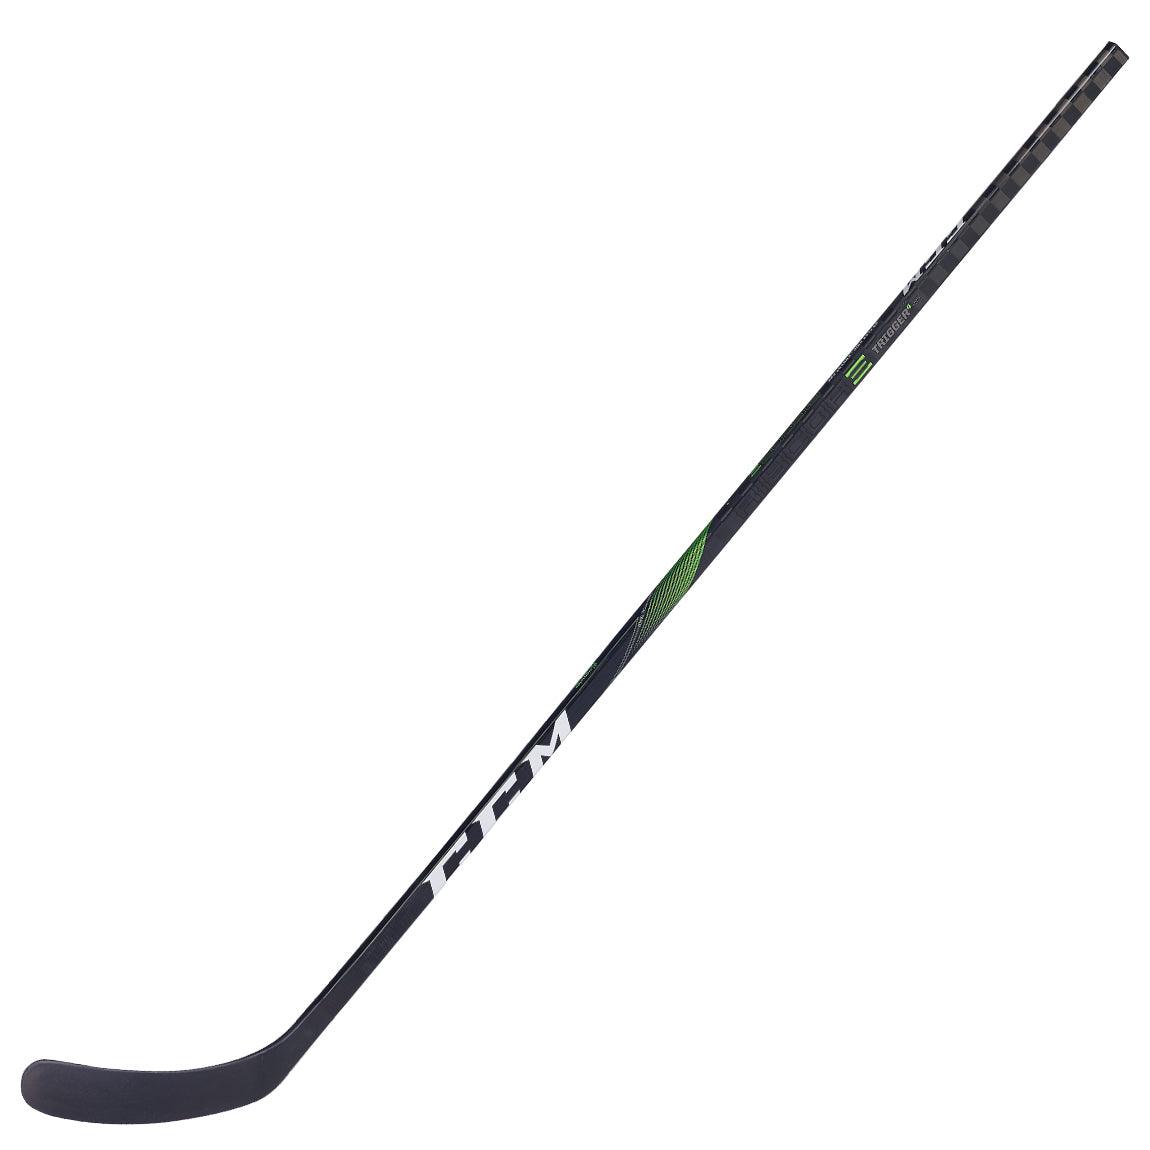 Ribcor Trigger4 Pro Hockey Stick - Intermediate - Sports Excellence